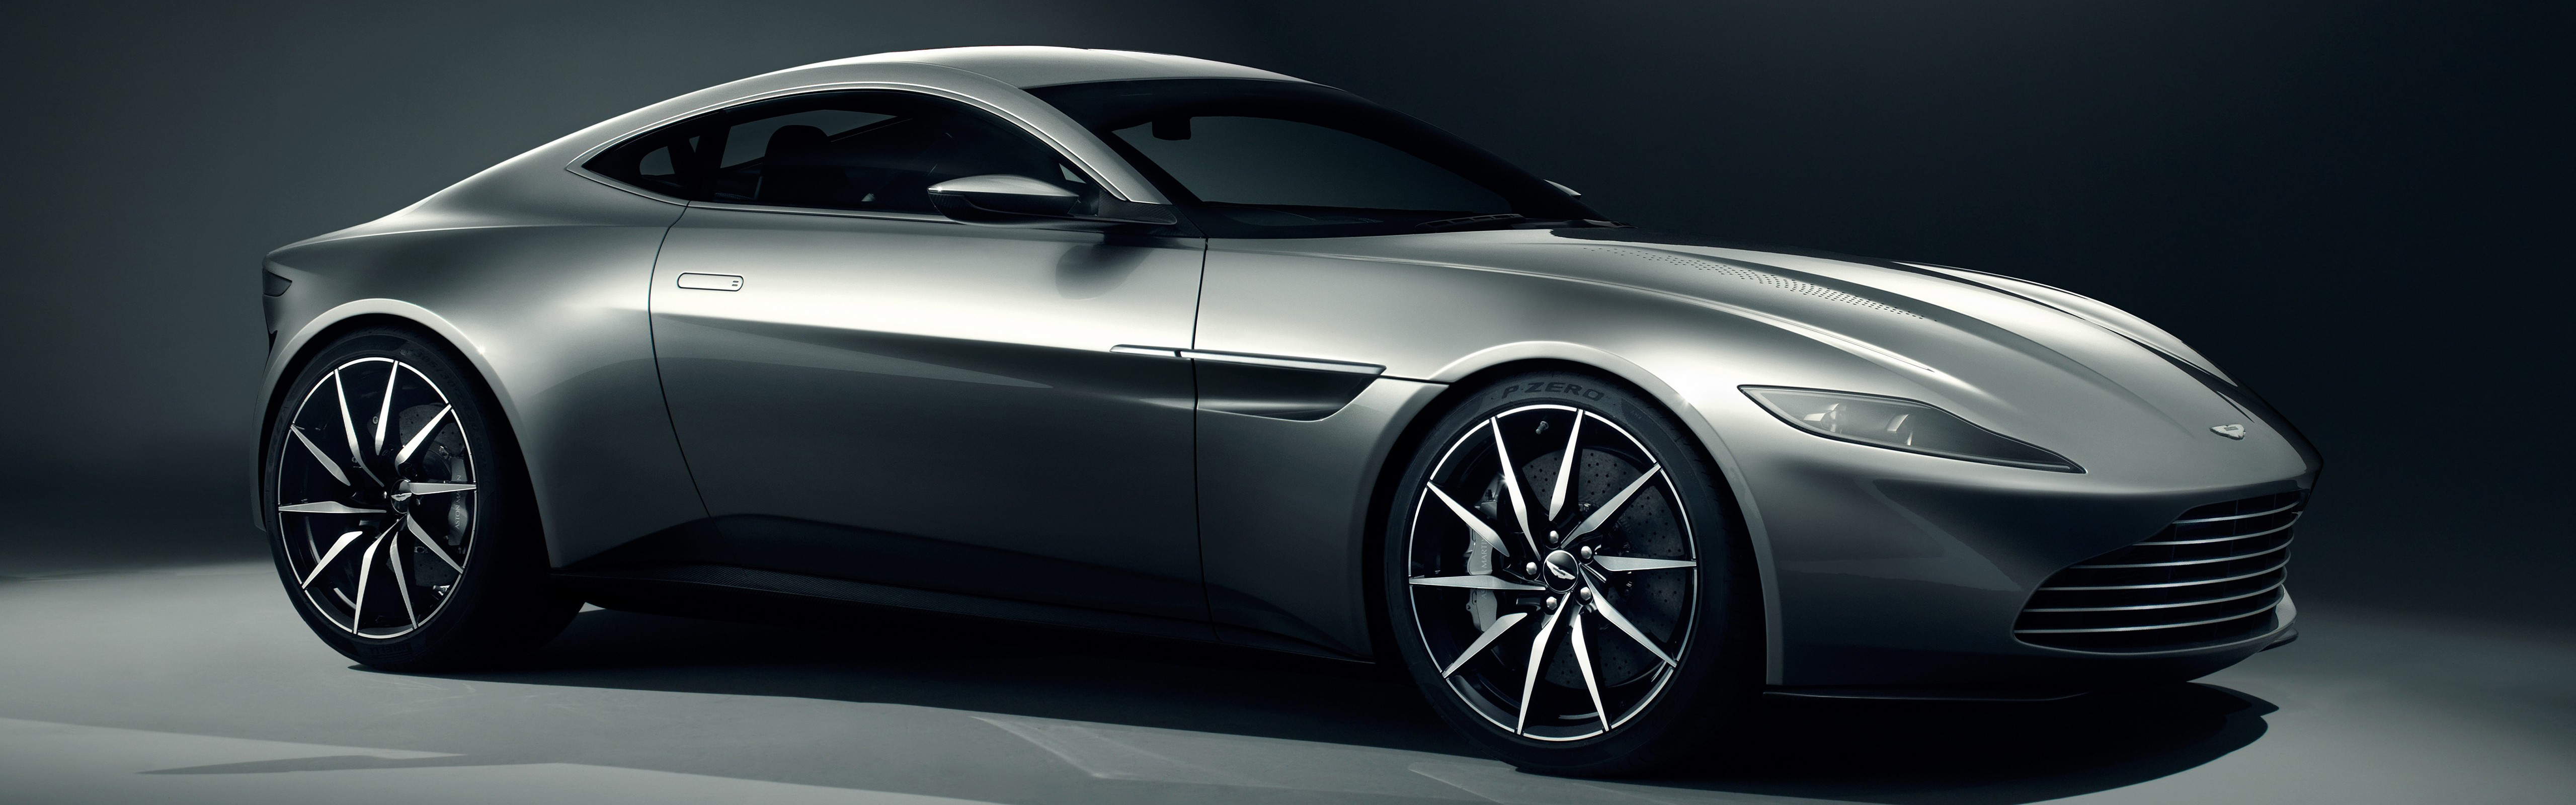 Aston Martin DB10, Car, Vehicle, Simple Background, Dual Monitors